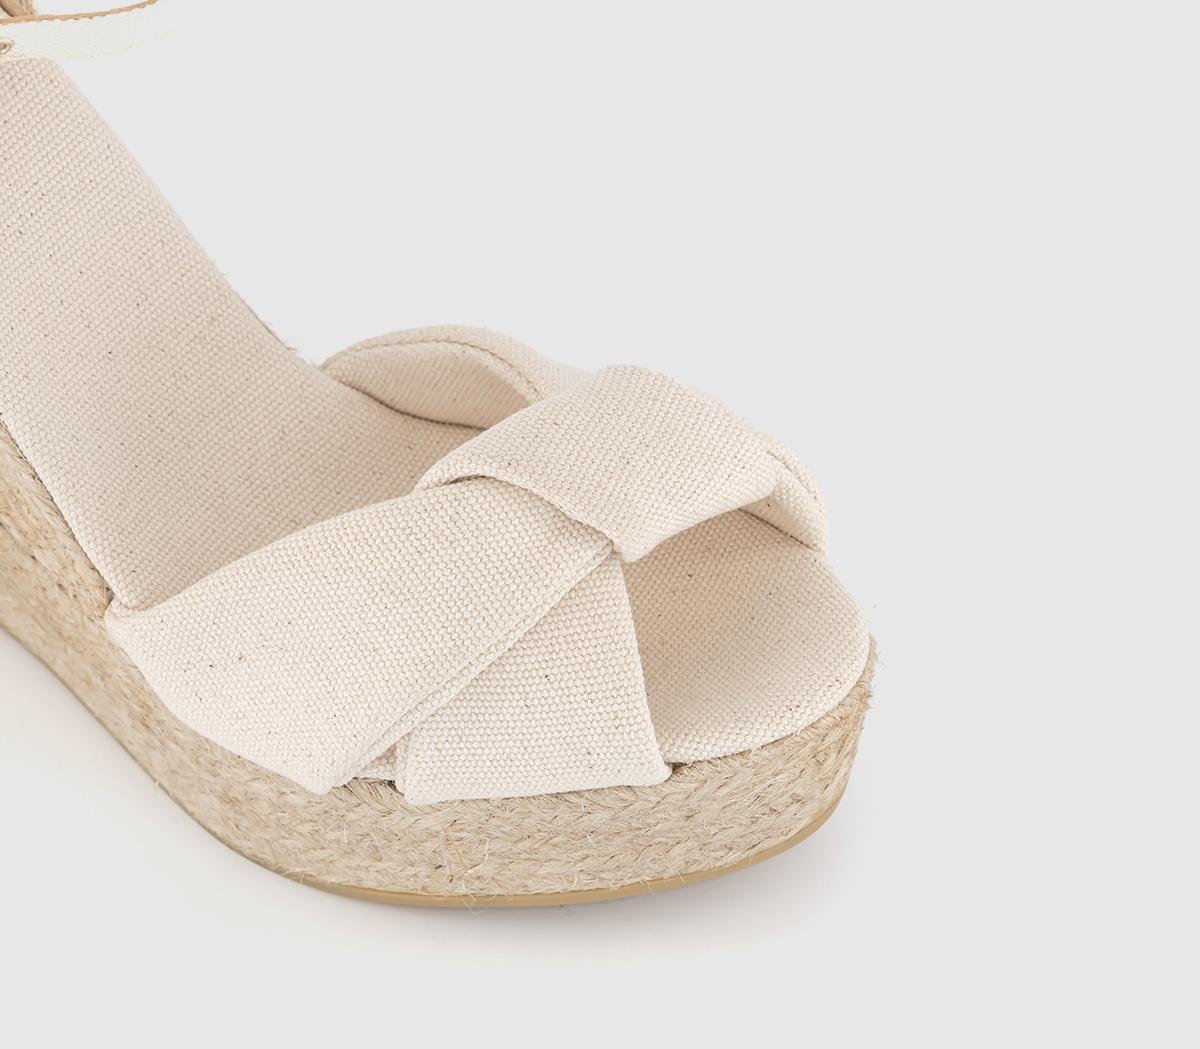 Gaimo for OFFICE Platform Twist Espradrilles Cream Canvas - Mid Heels